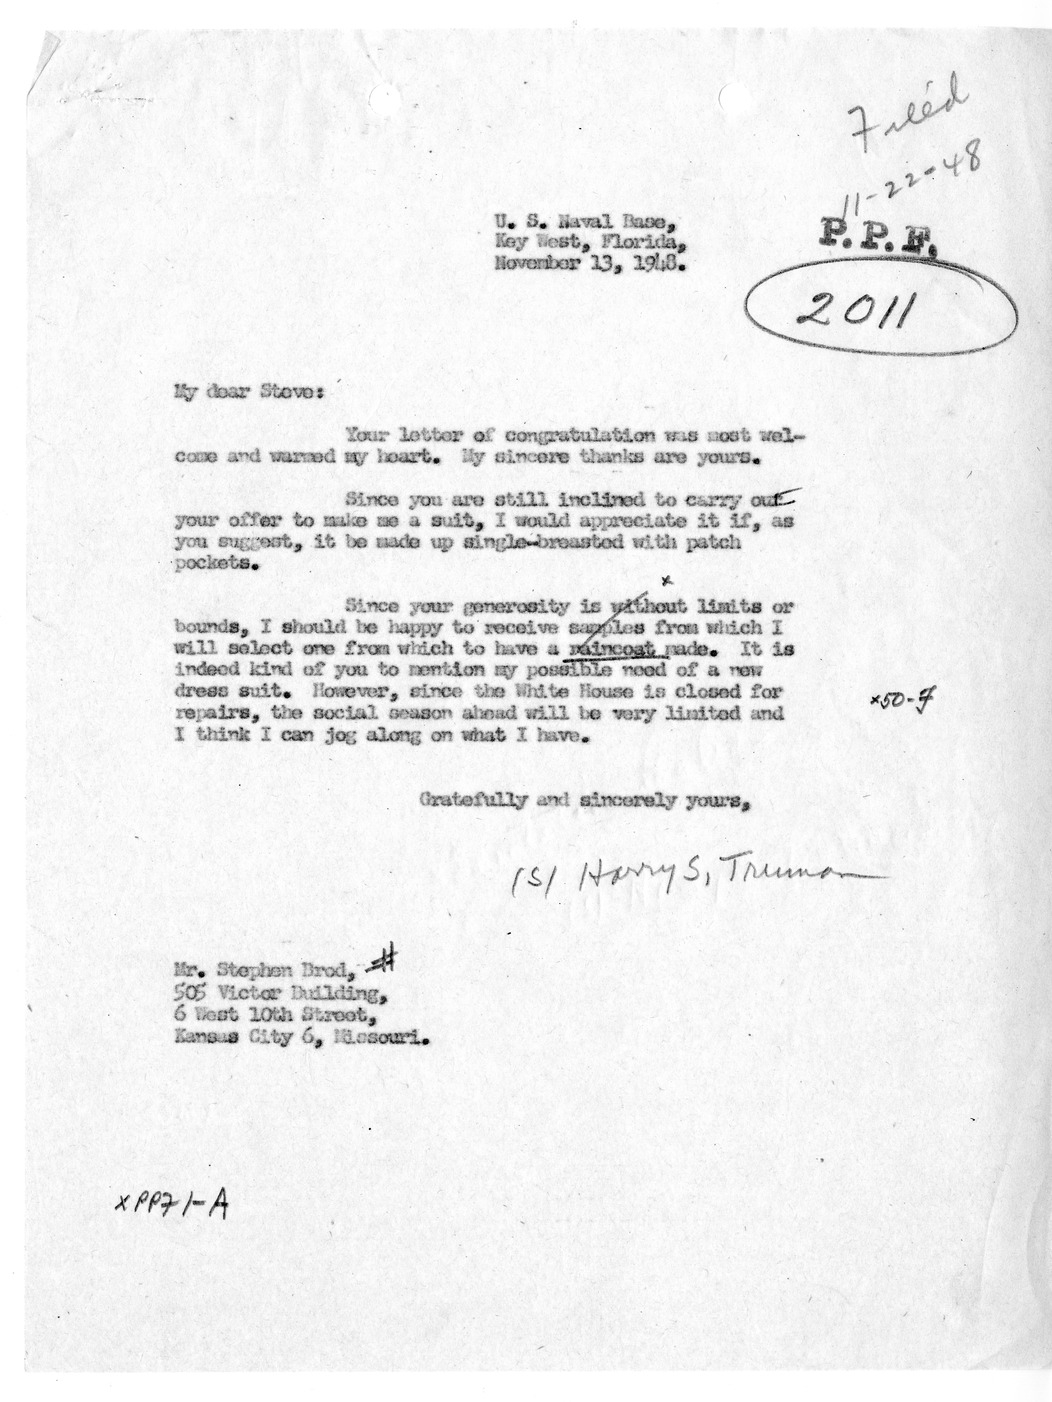 Correspondence Between President Harry S. Truman and Stephen Brod